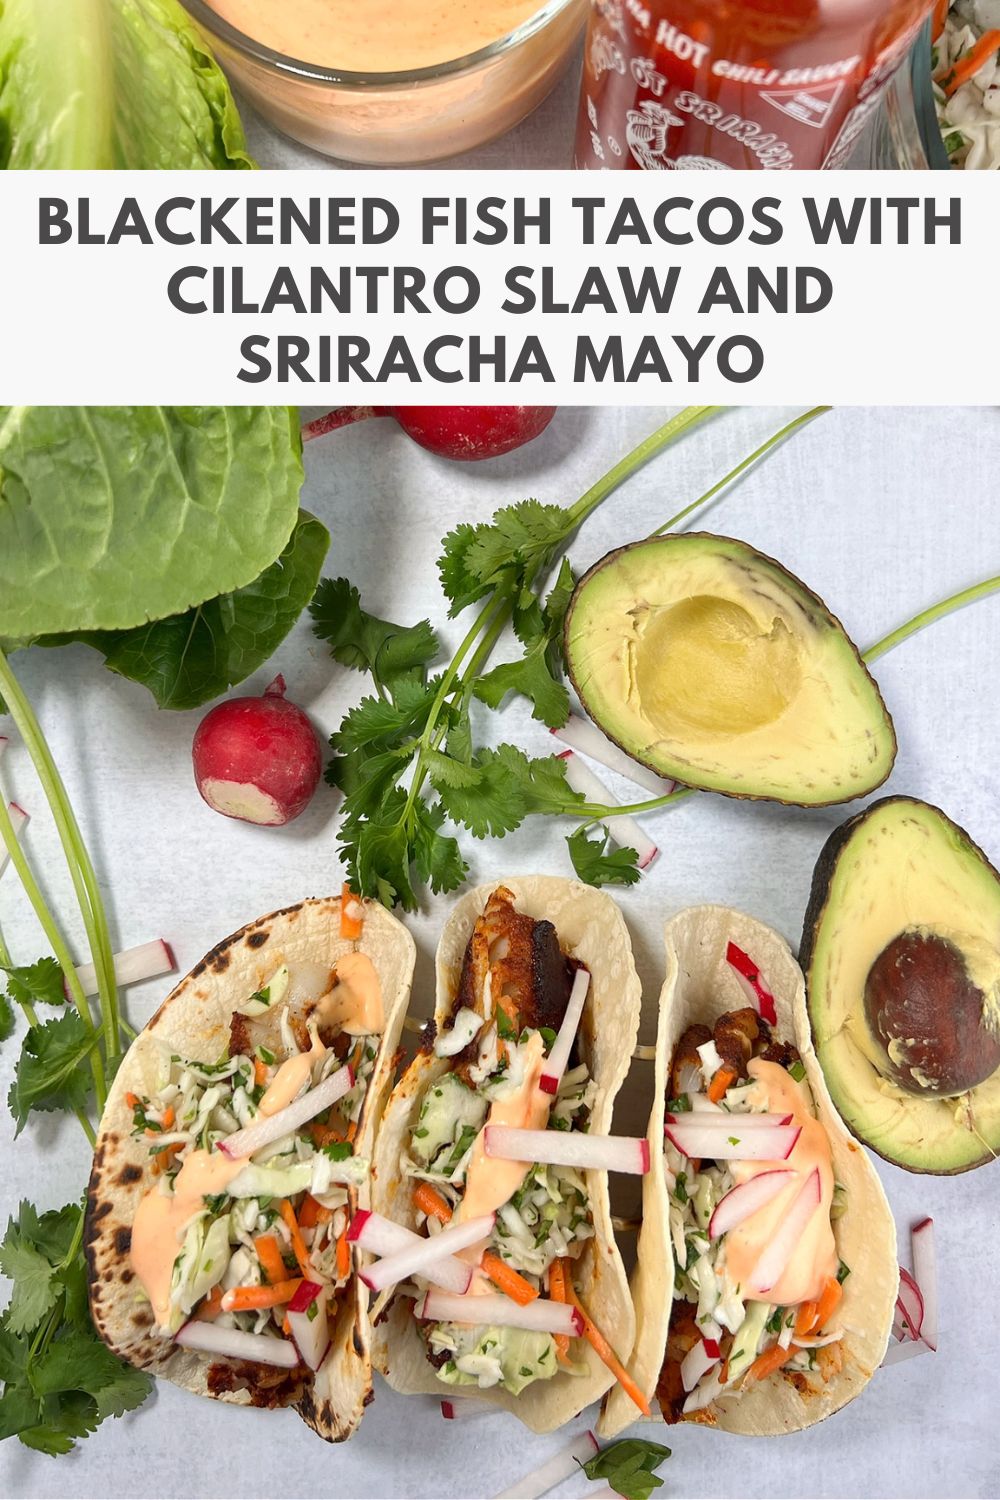 Blackened Fish Tacos with Cilantro Slaw and Sriracha Mayo via @preventionrd